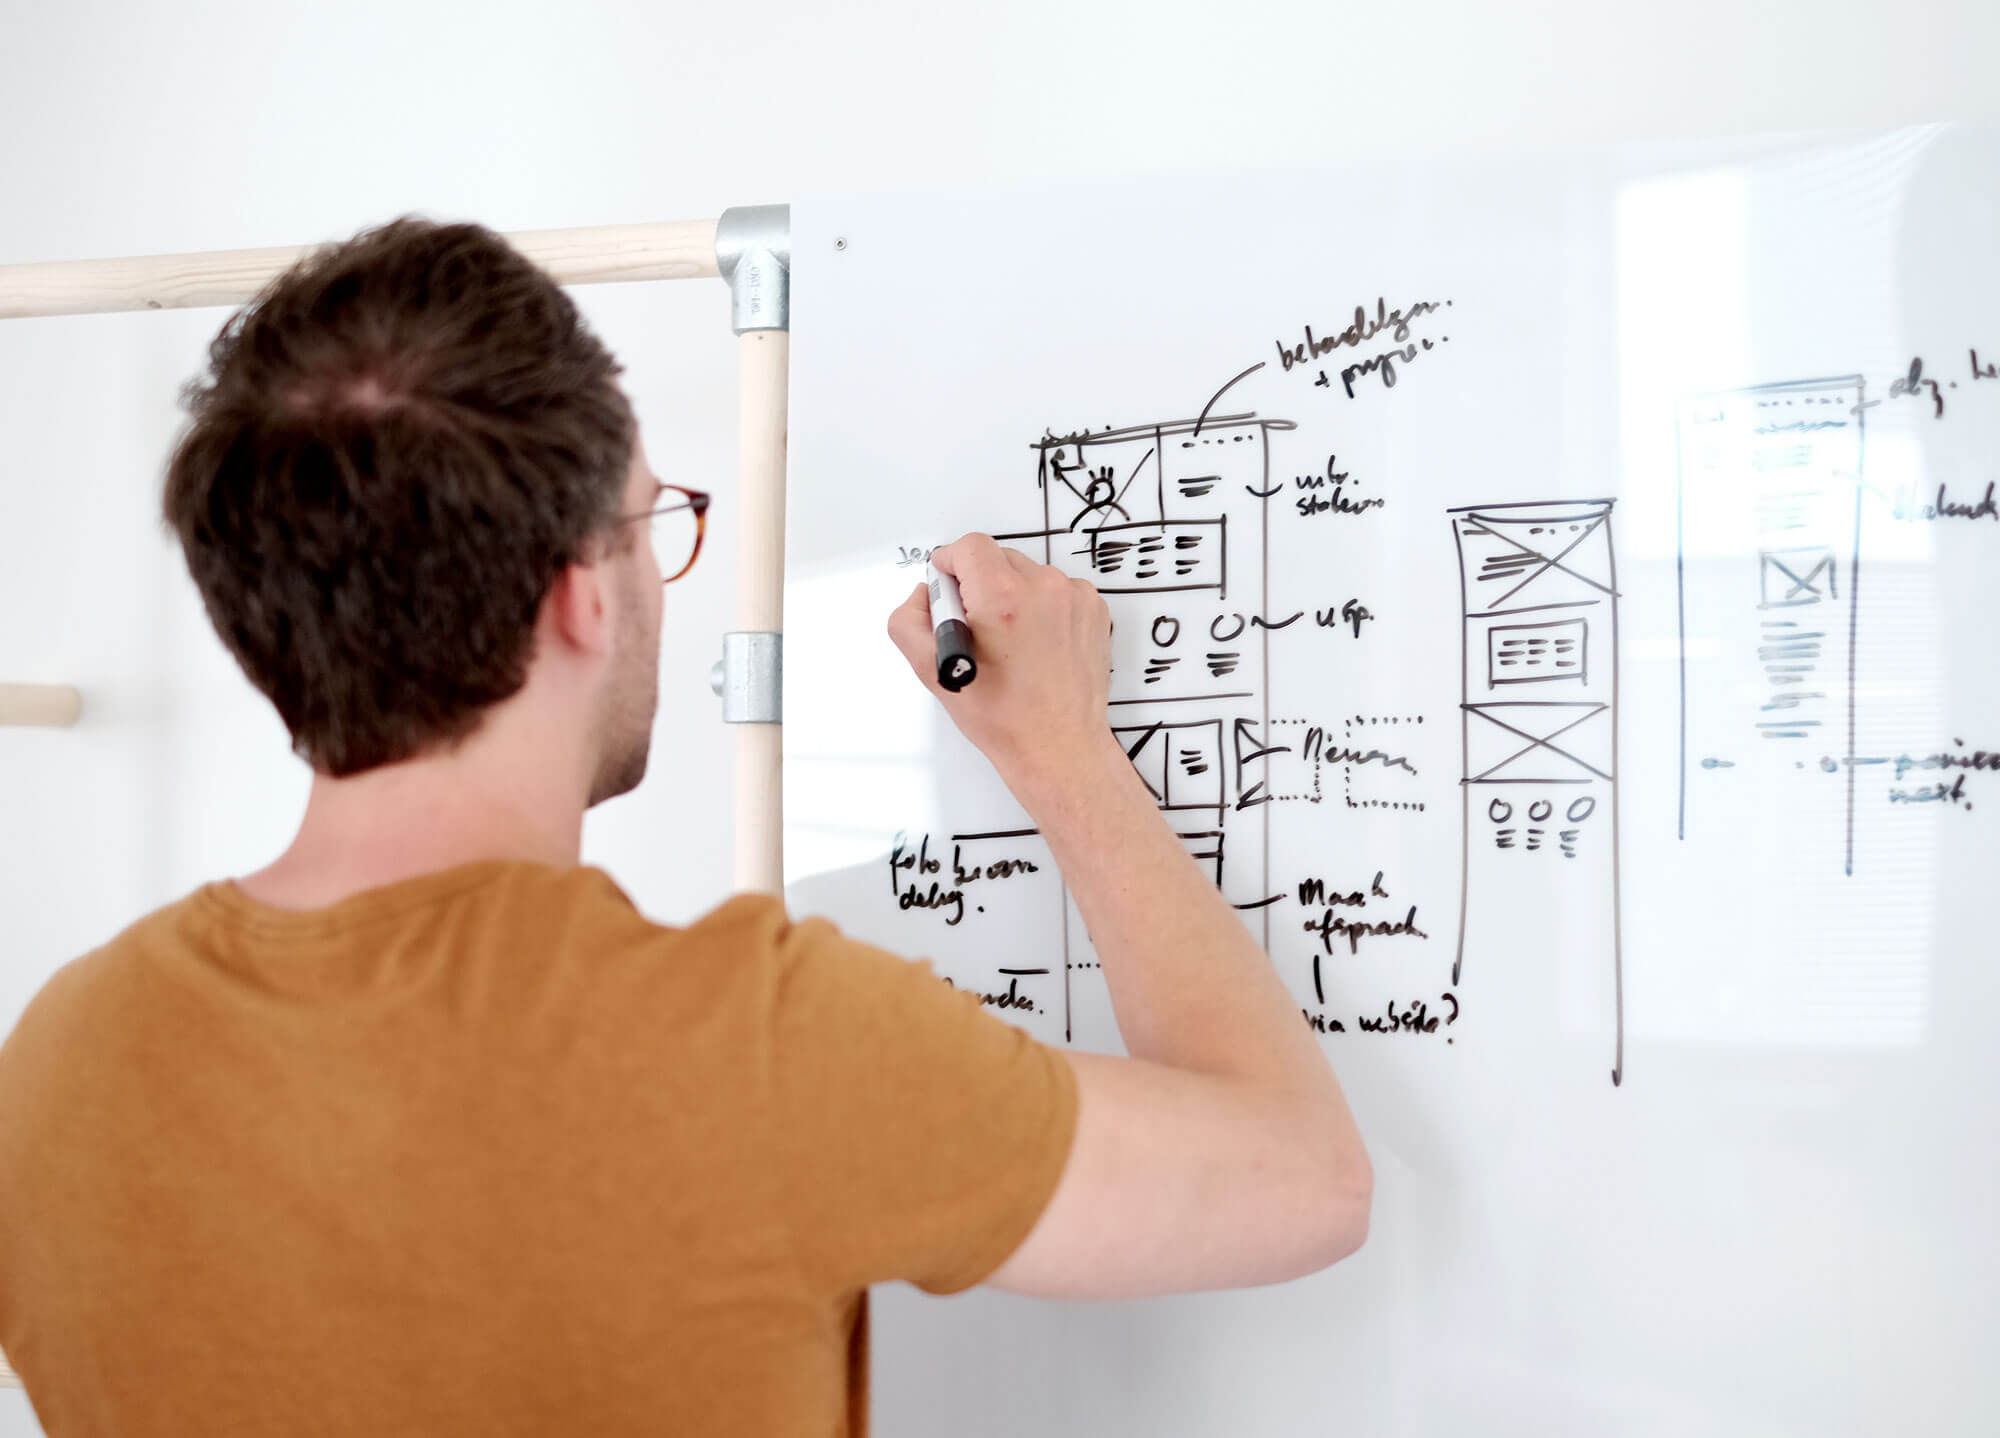 Joris sketches a website framework on the whiteboard